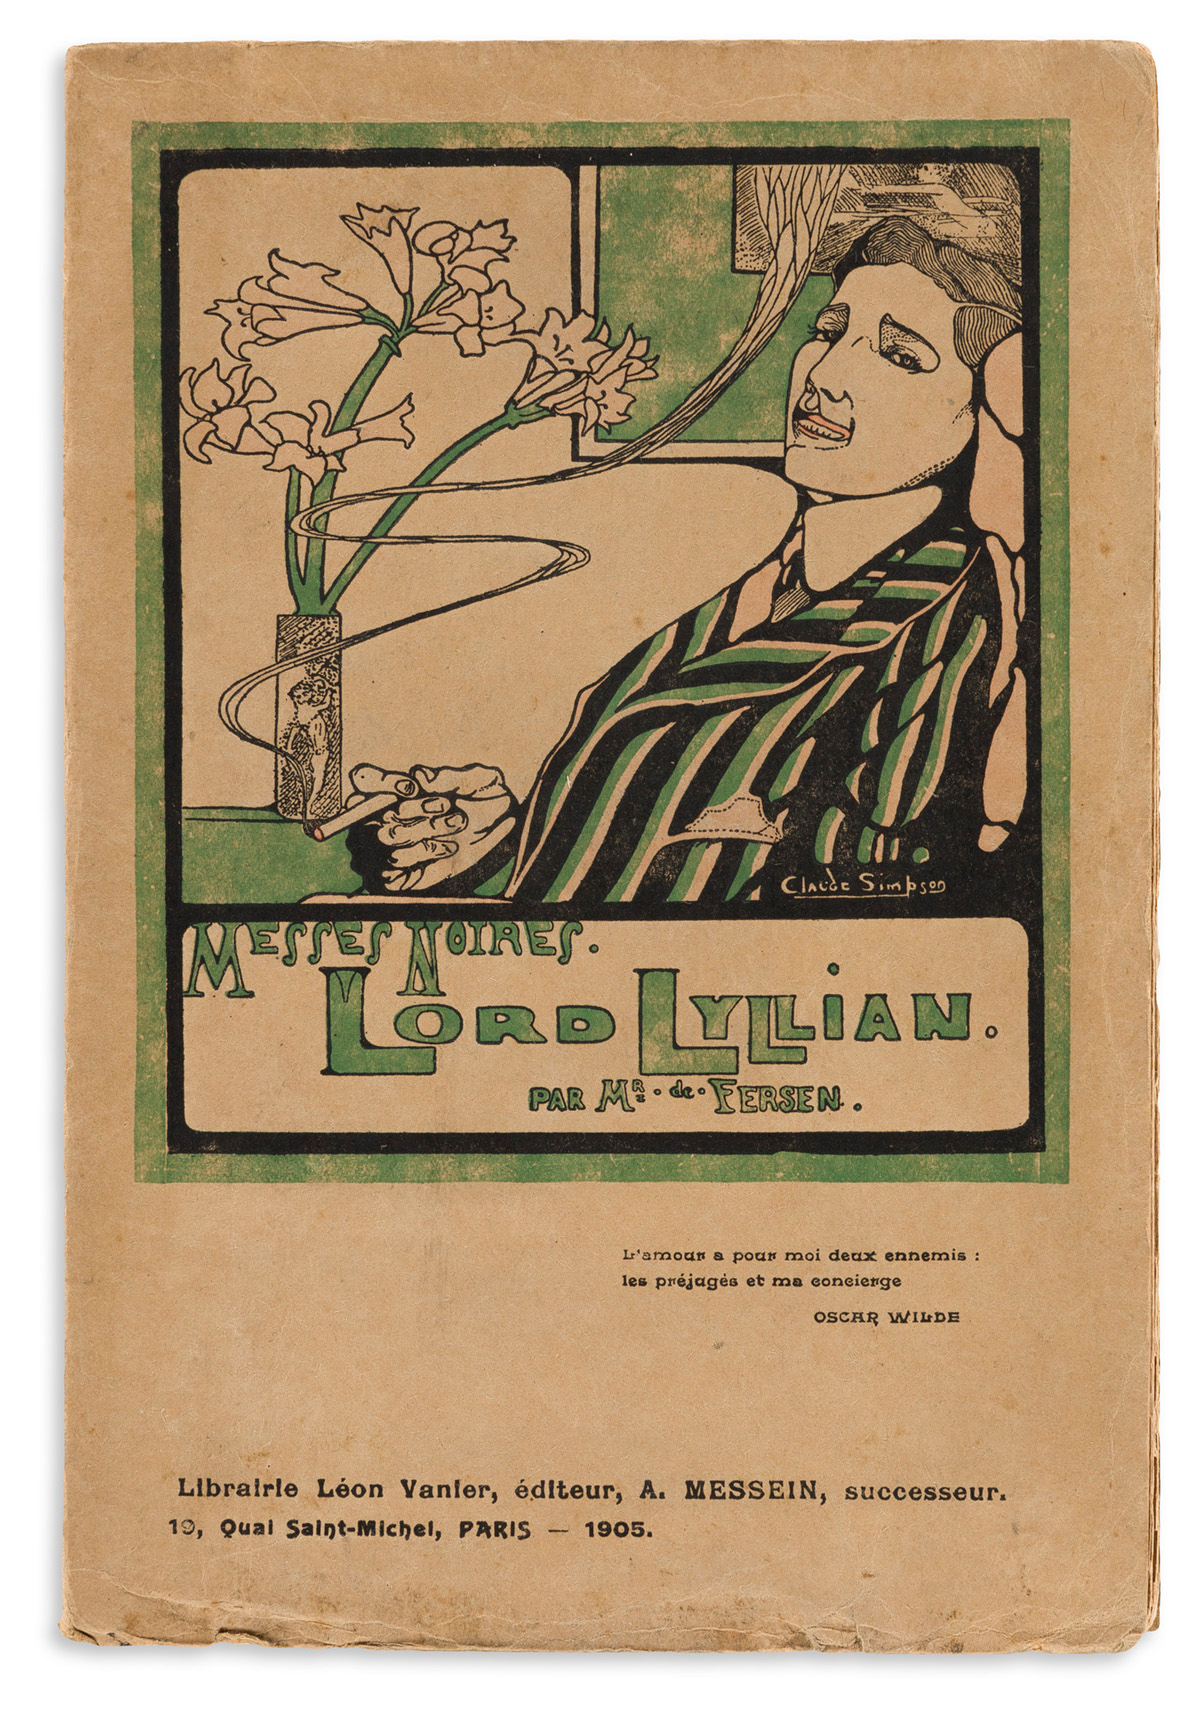 JACQUES D’ADELSWÄRD-FERSEN (1880-1923) Messes Noires: Lord Lyllian.